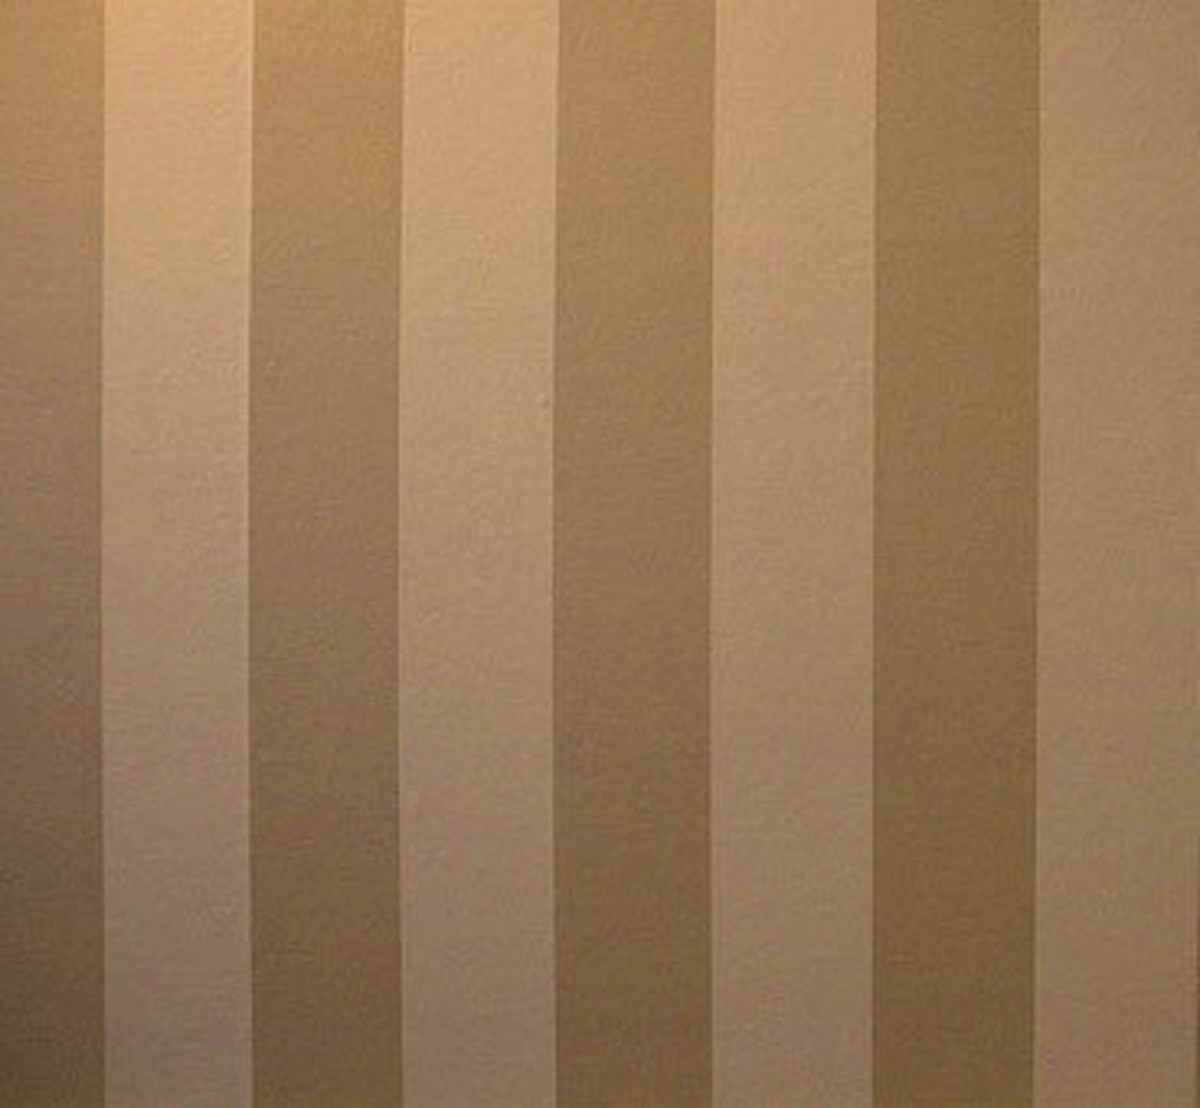 Vertical stripes make walls look taller—just like a striped dress elongates the body!